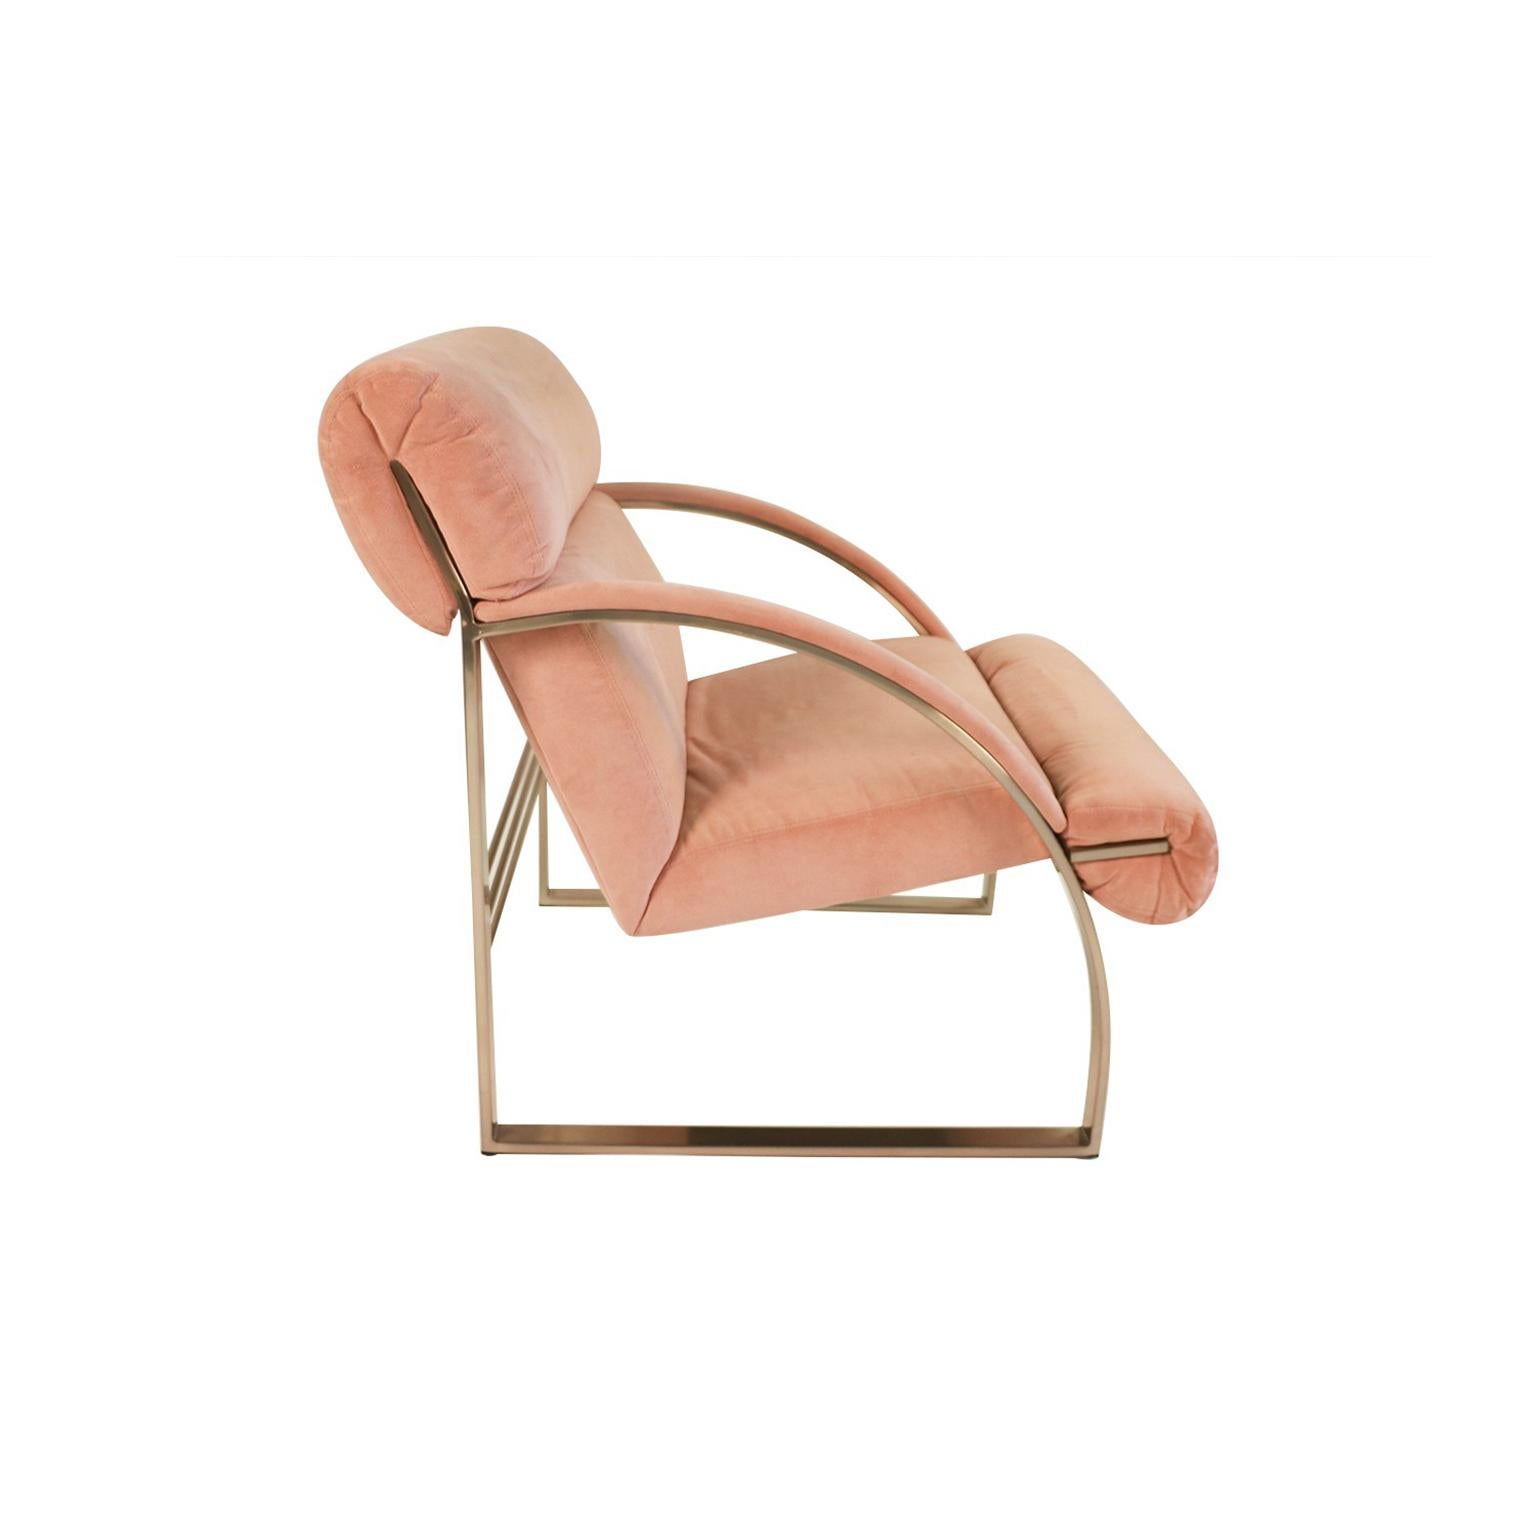 20th Century Midcentury Milo Baughman Style Chrome Lounge Chair For Sale